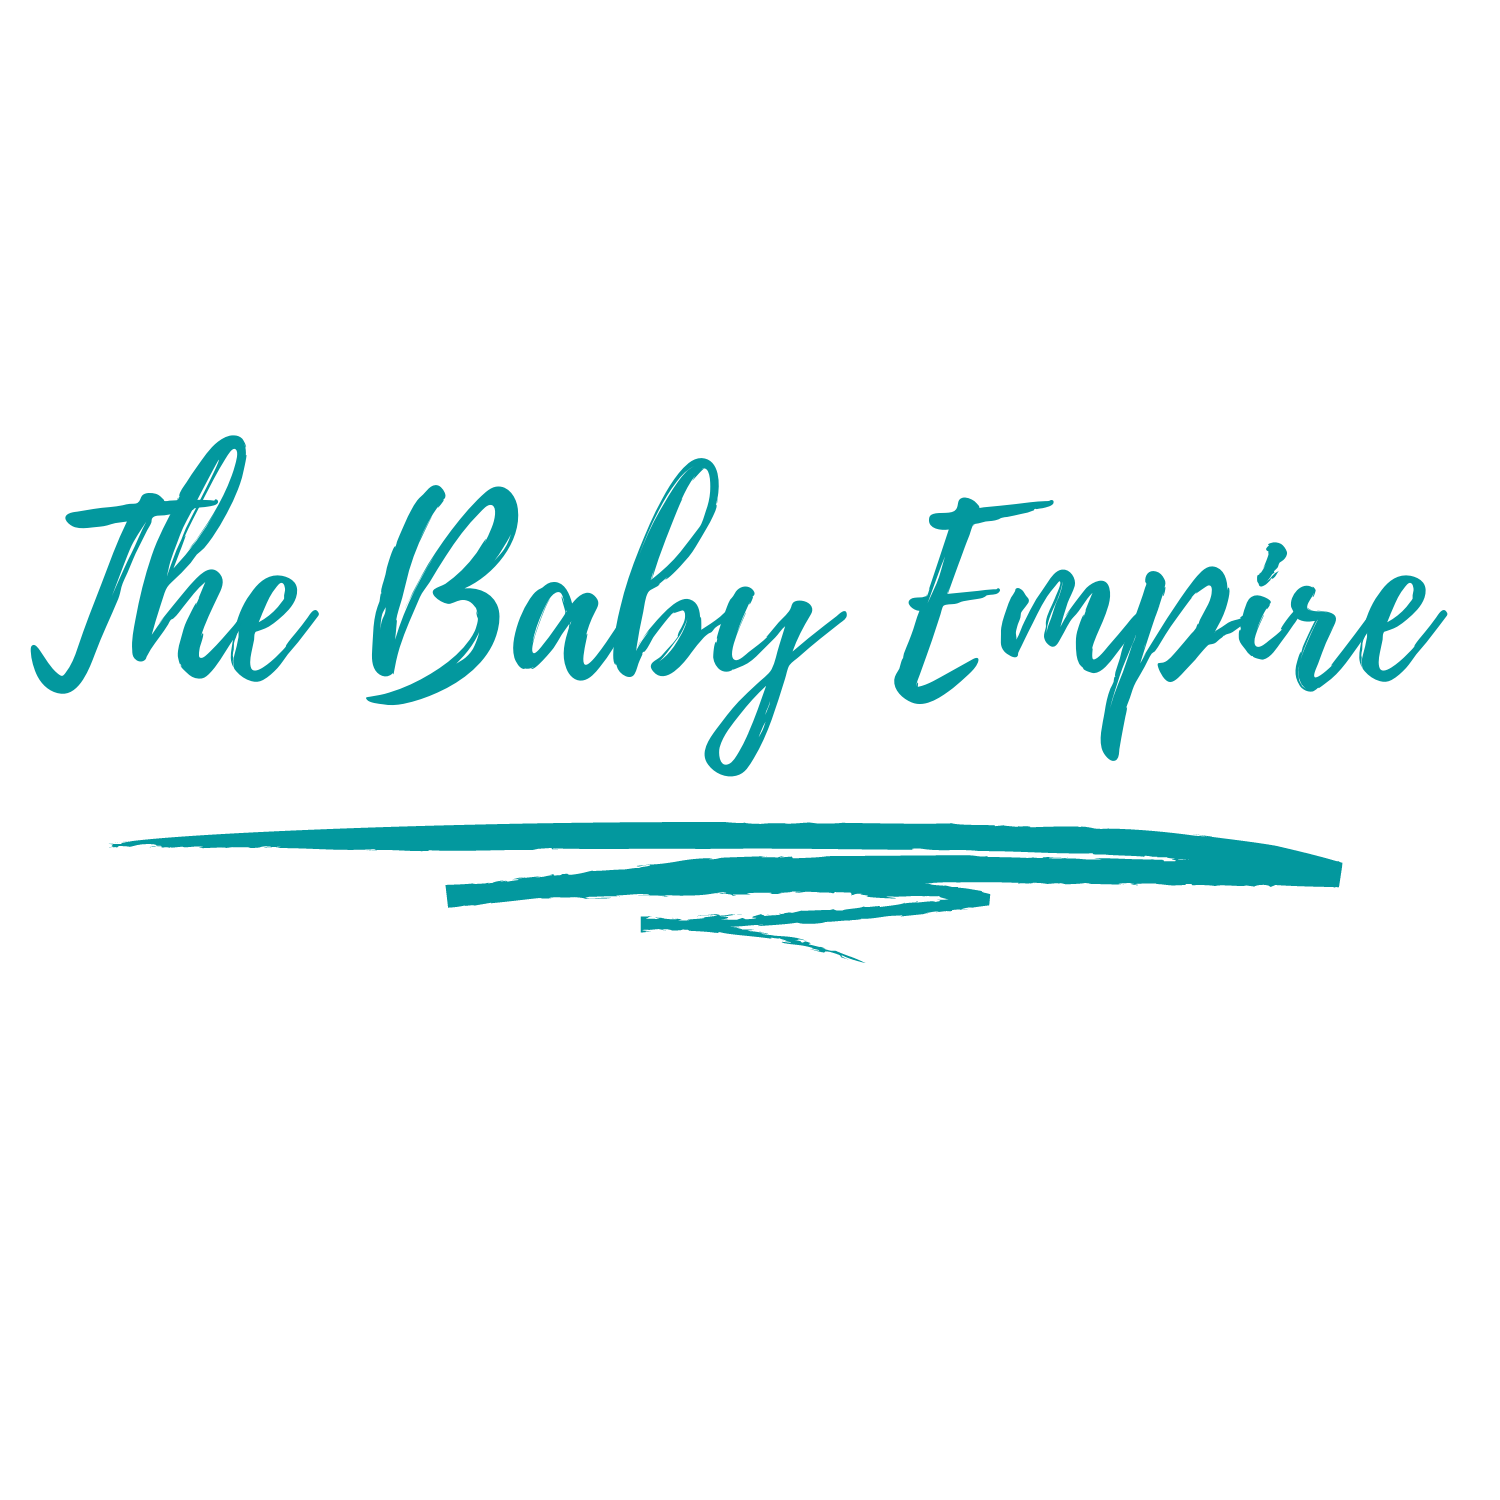 The Baby Empire Logo